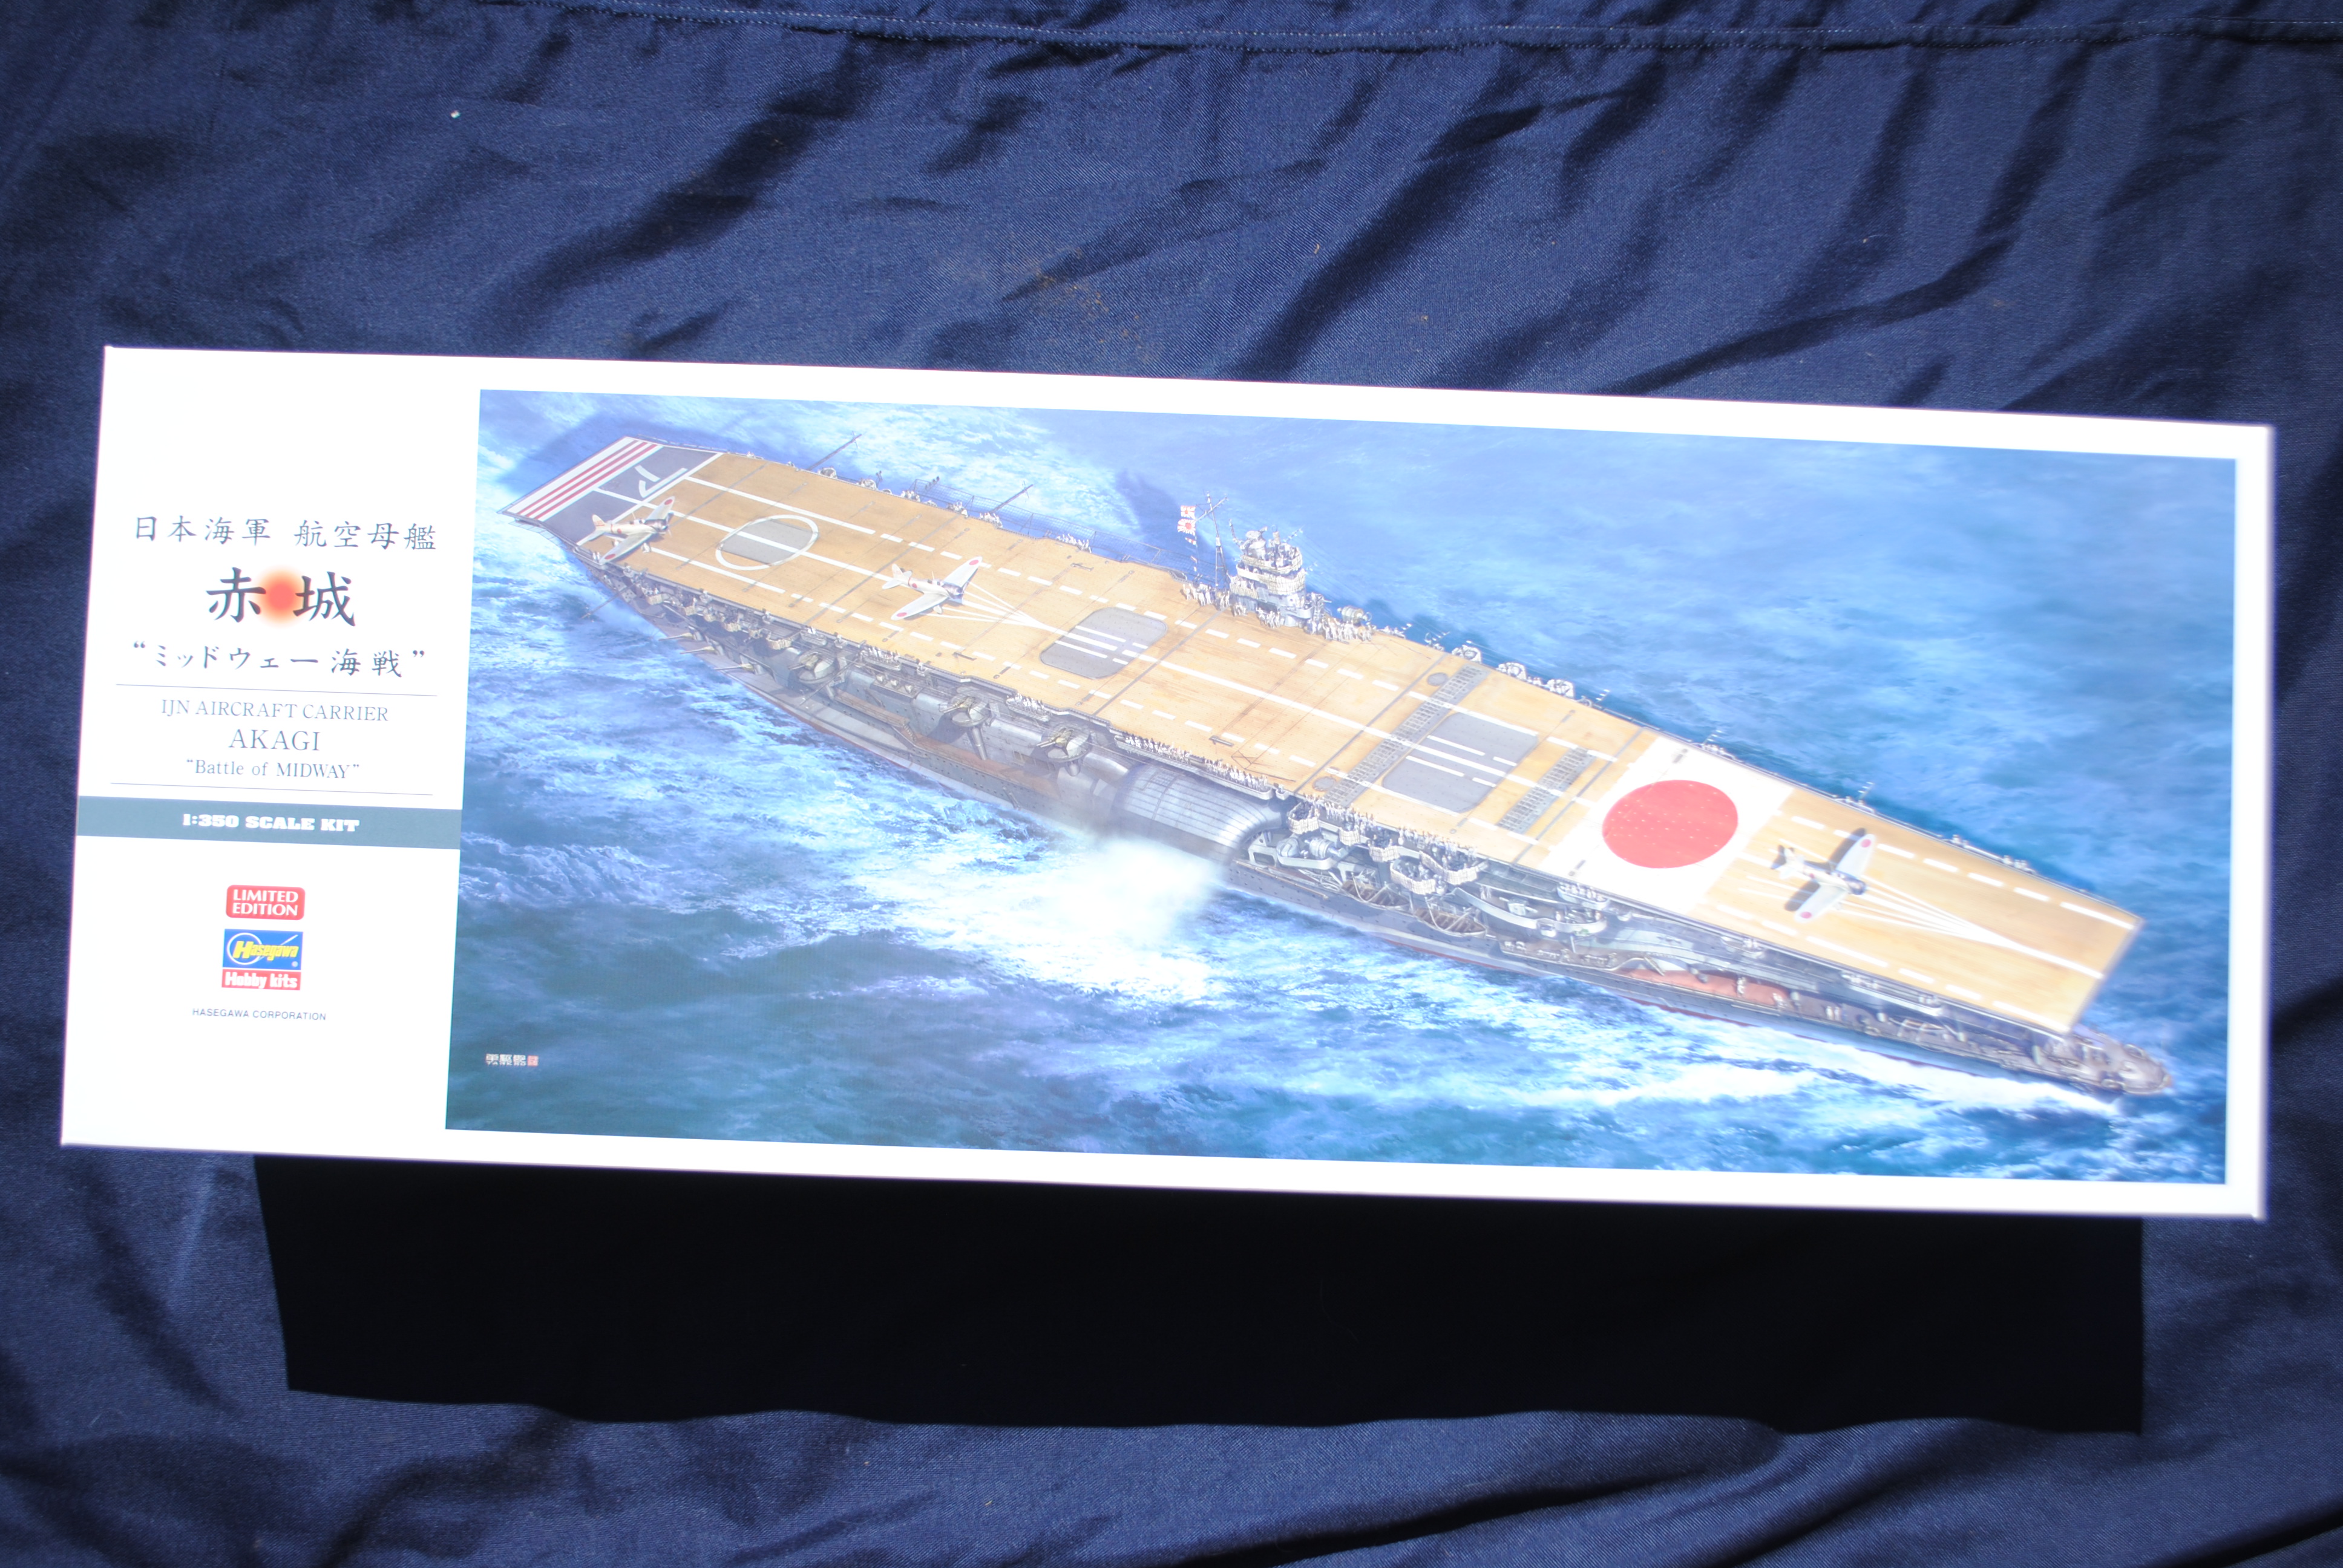 Hasegawa 40103 IJN Aircraft Carrier AKAGI 'Battle of MIDWAY'